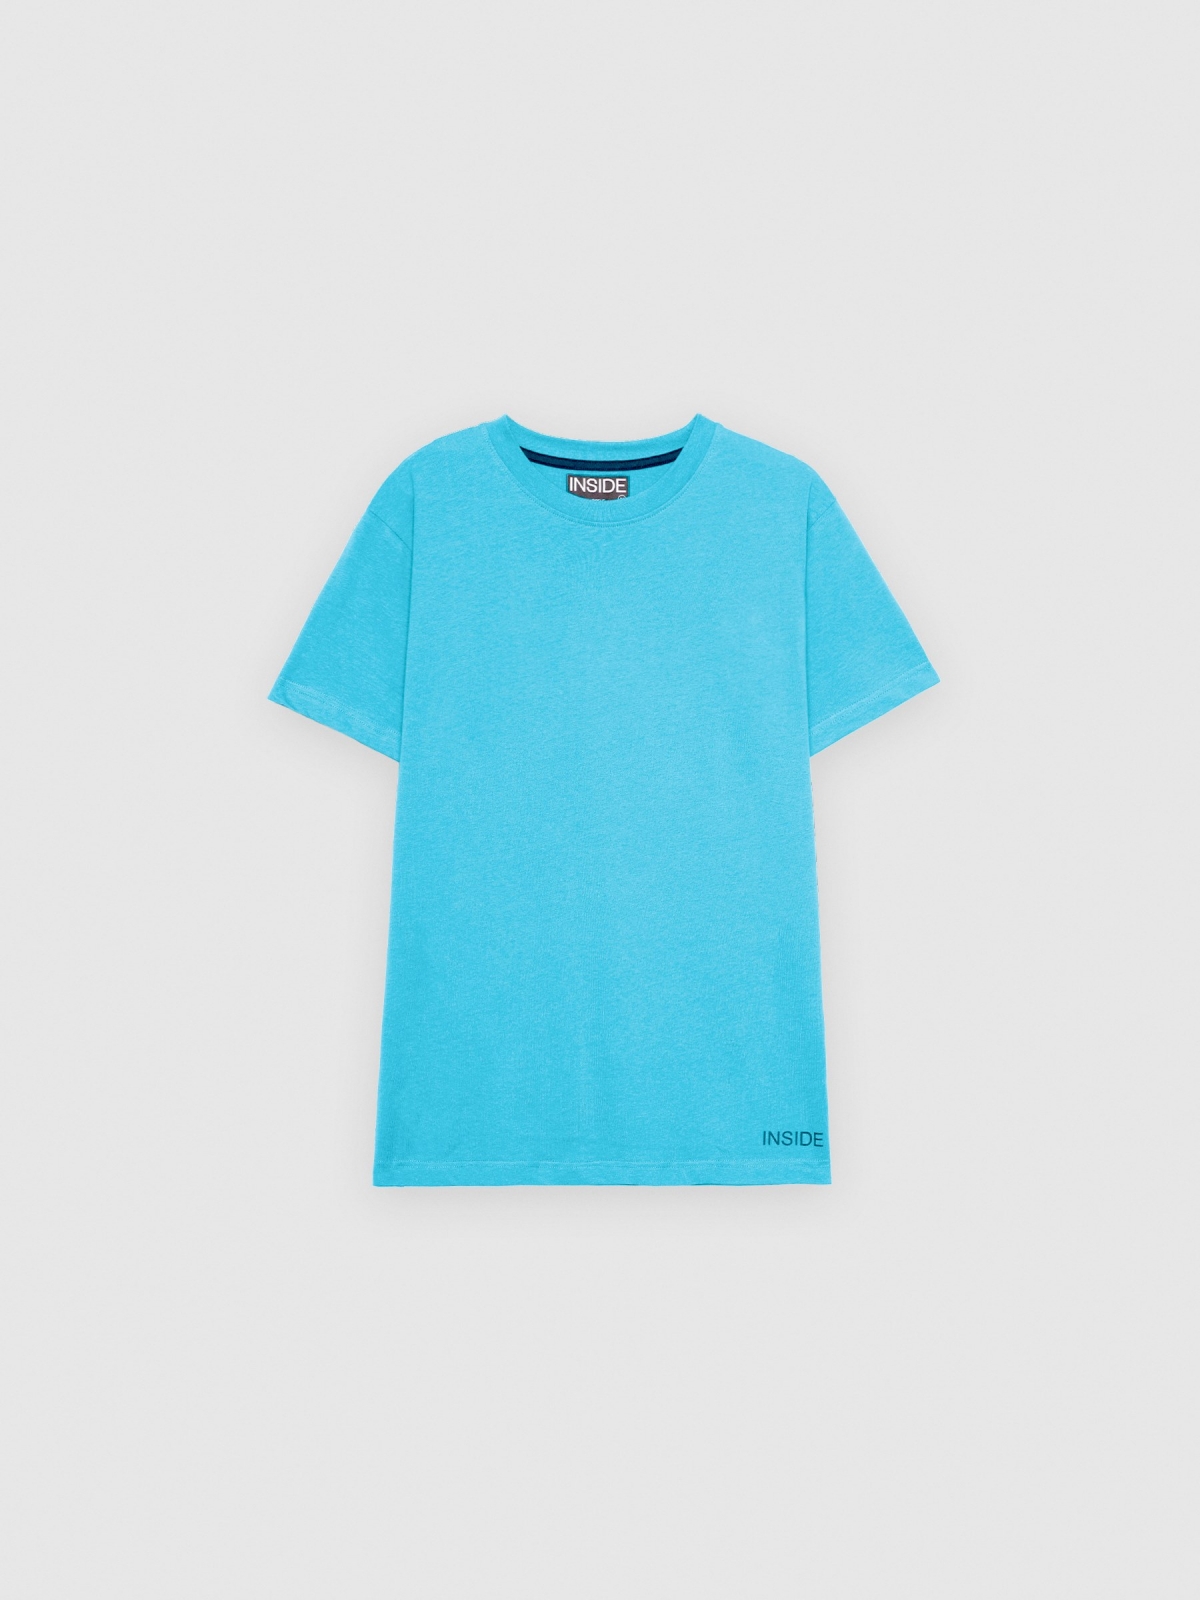  Camiseta básica manga corta azul claro